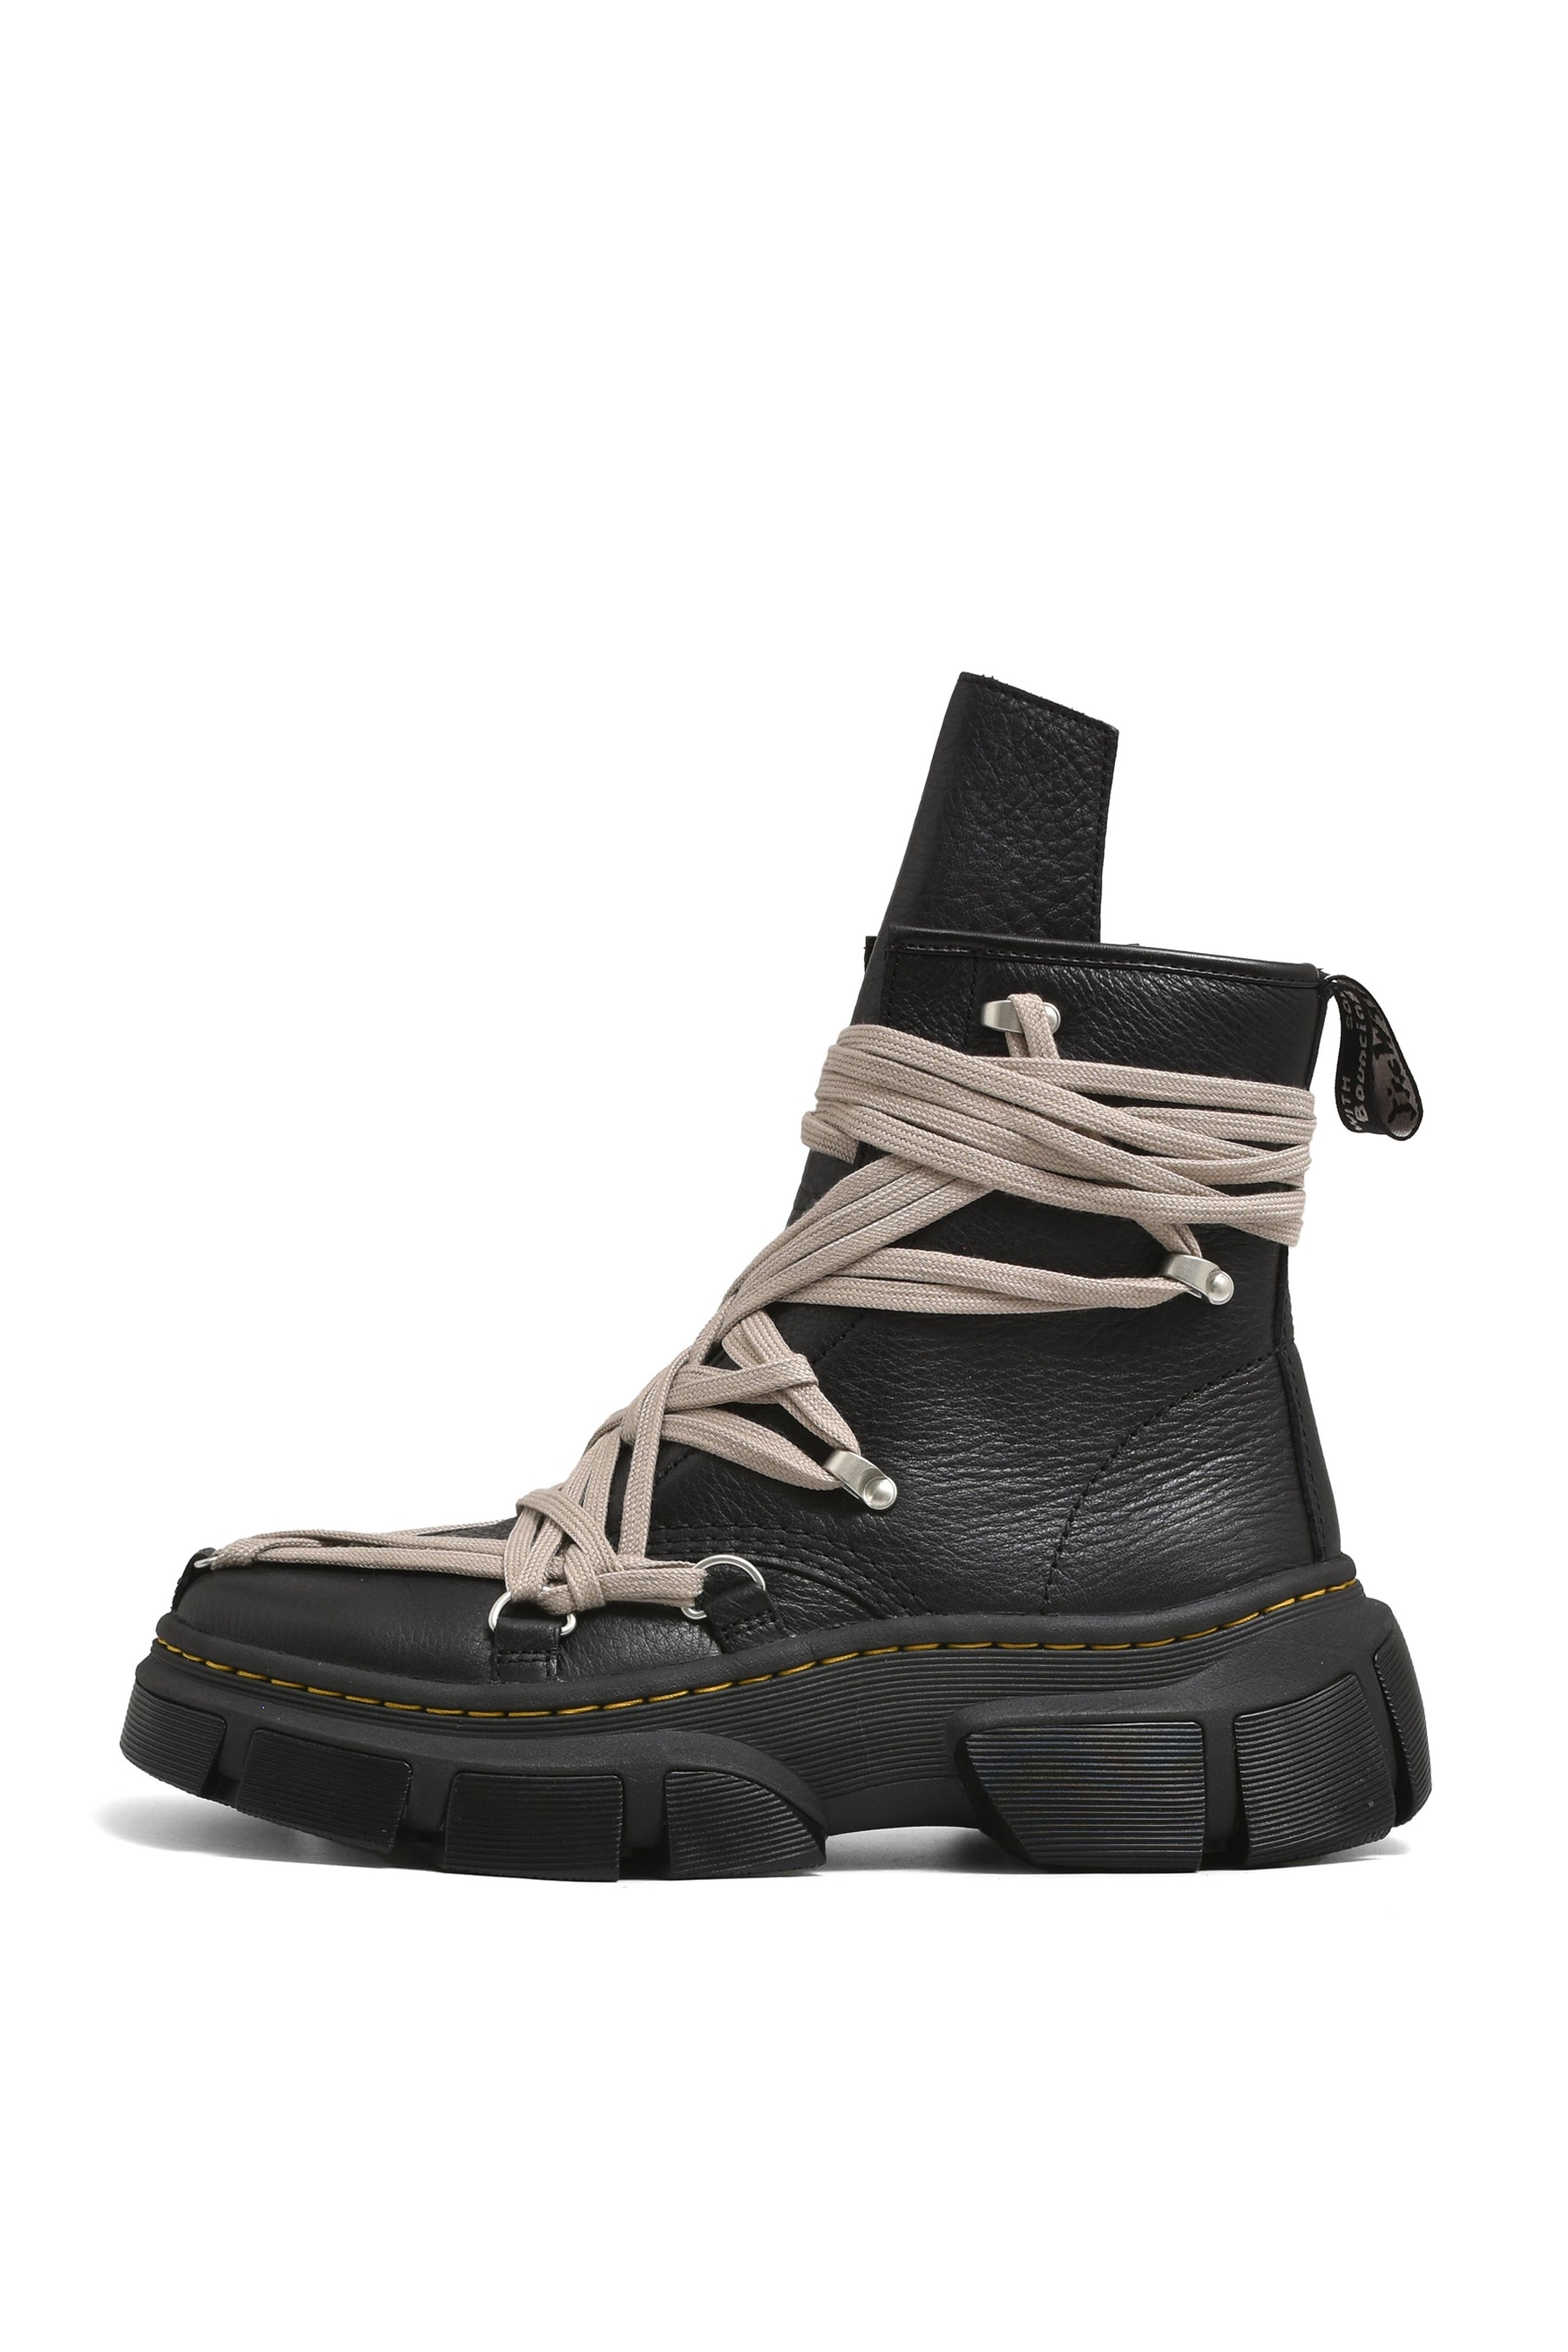 Rick Owens × Dr. Martens 1460 Mega Lace - 靴